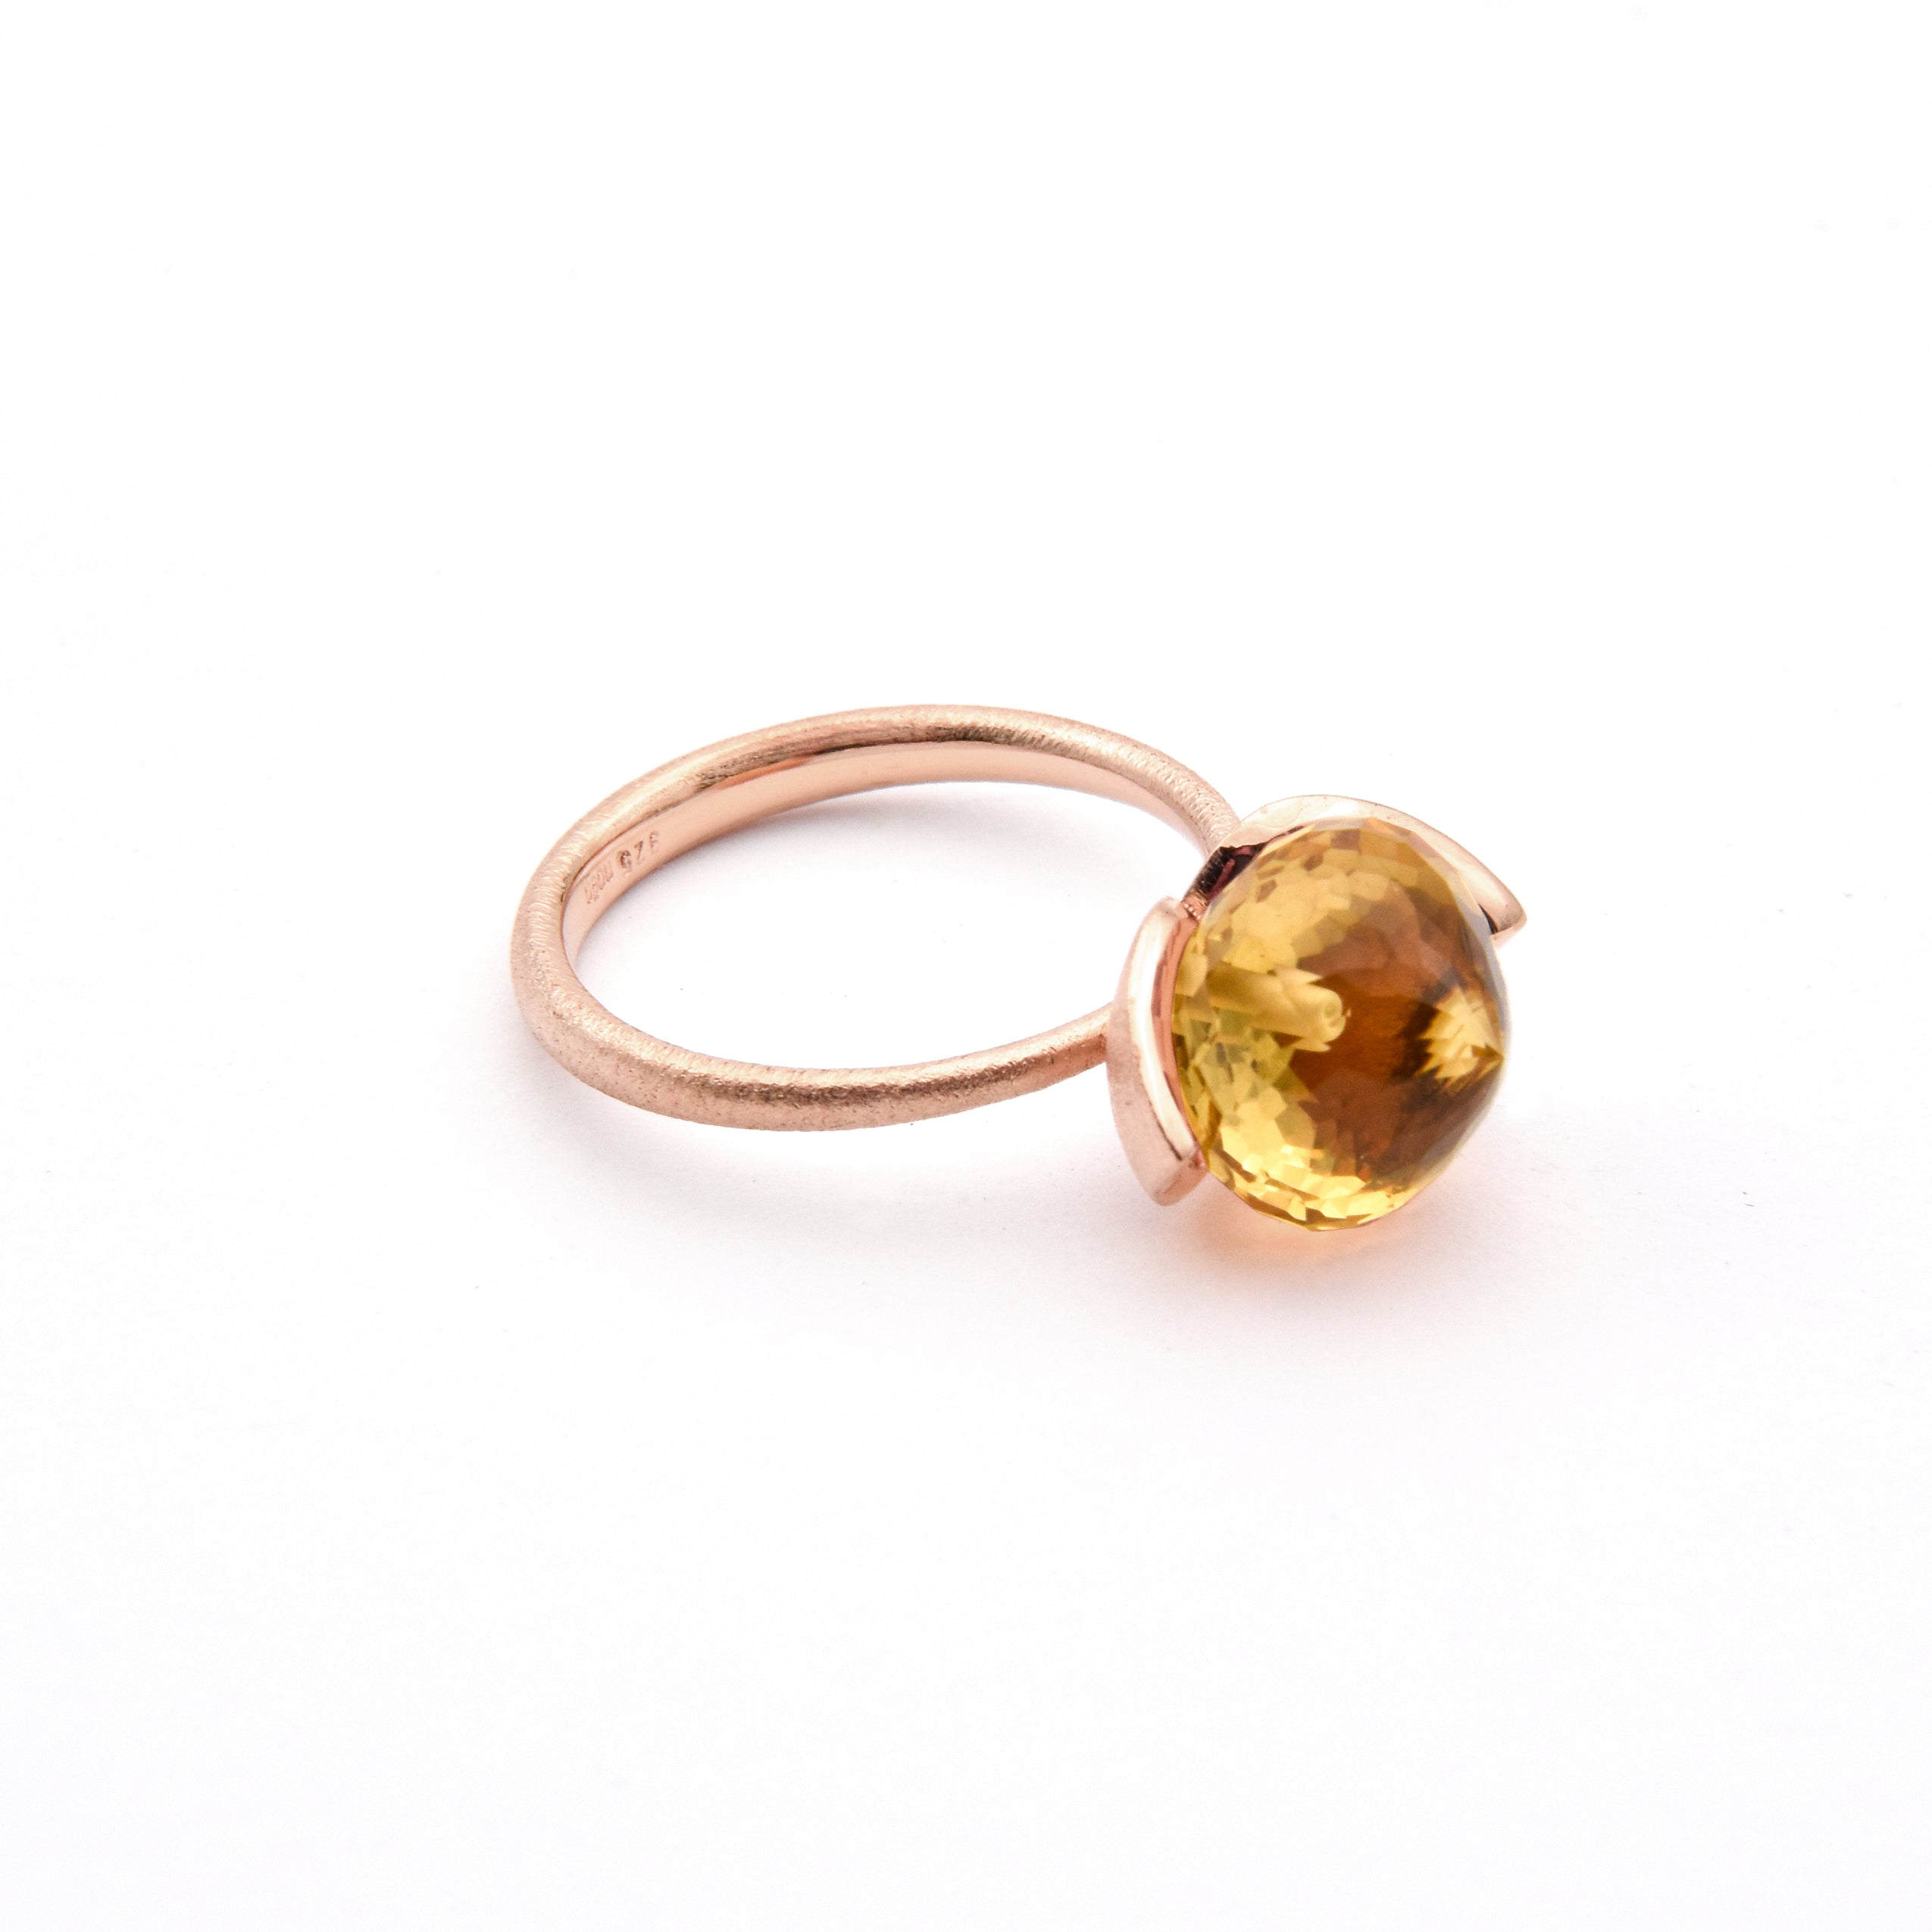 Dolce ring "medium" with champagne quartz 925/-